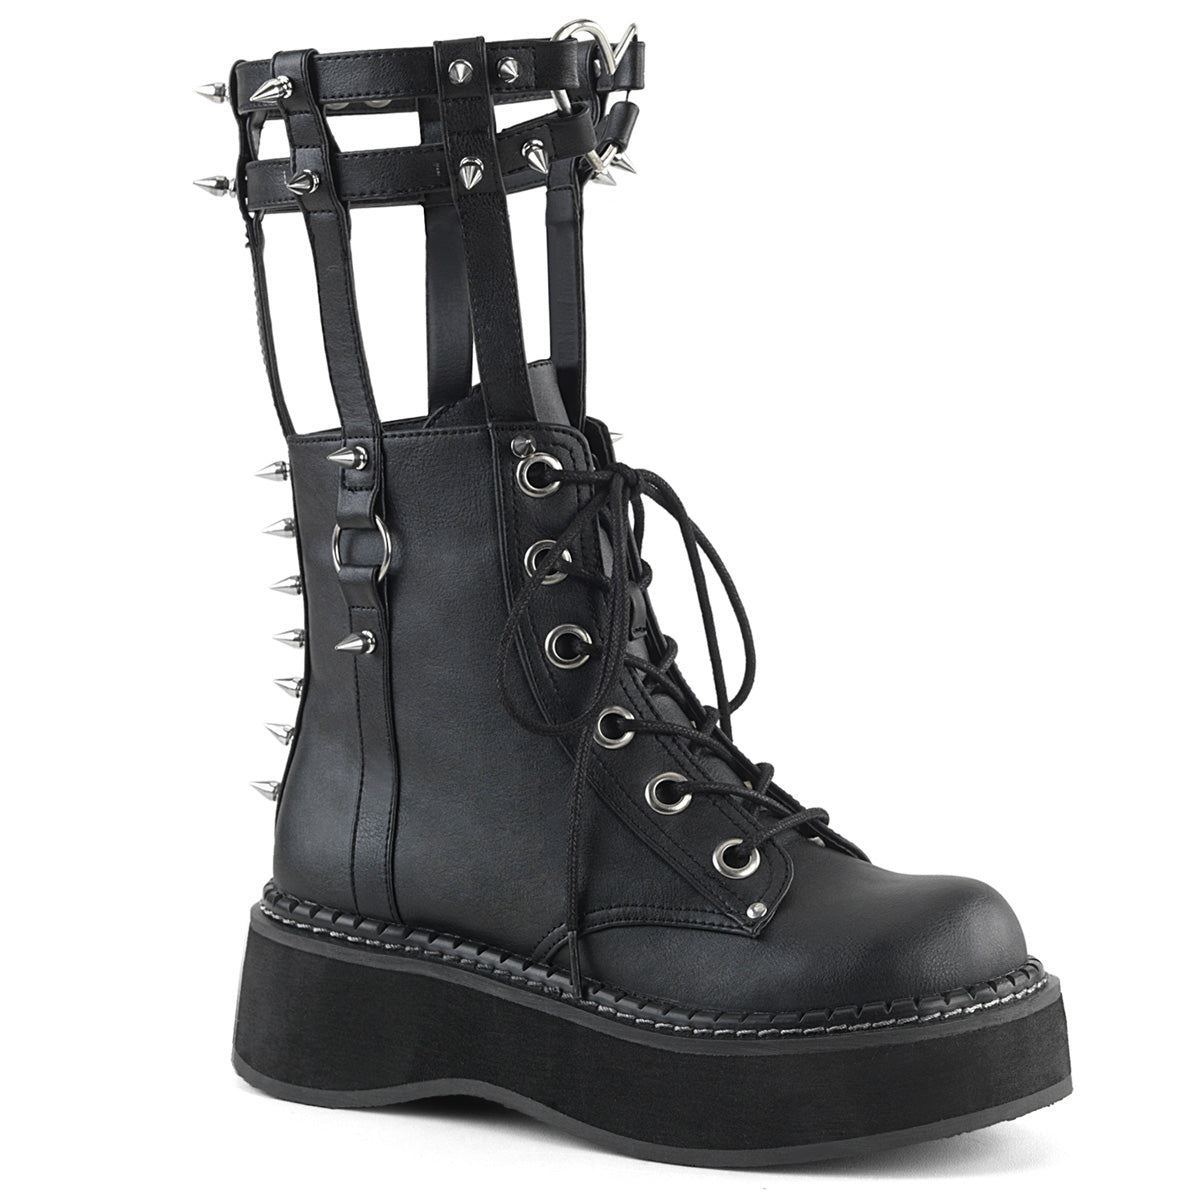 EMILY-357 Alternative Footwear Demonia Women's Mid-Calf & Knee High Boots Blk Vegan Leather